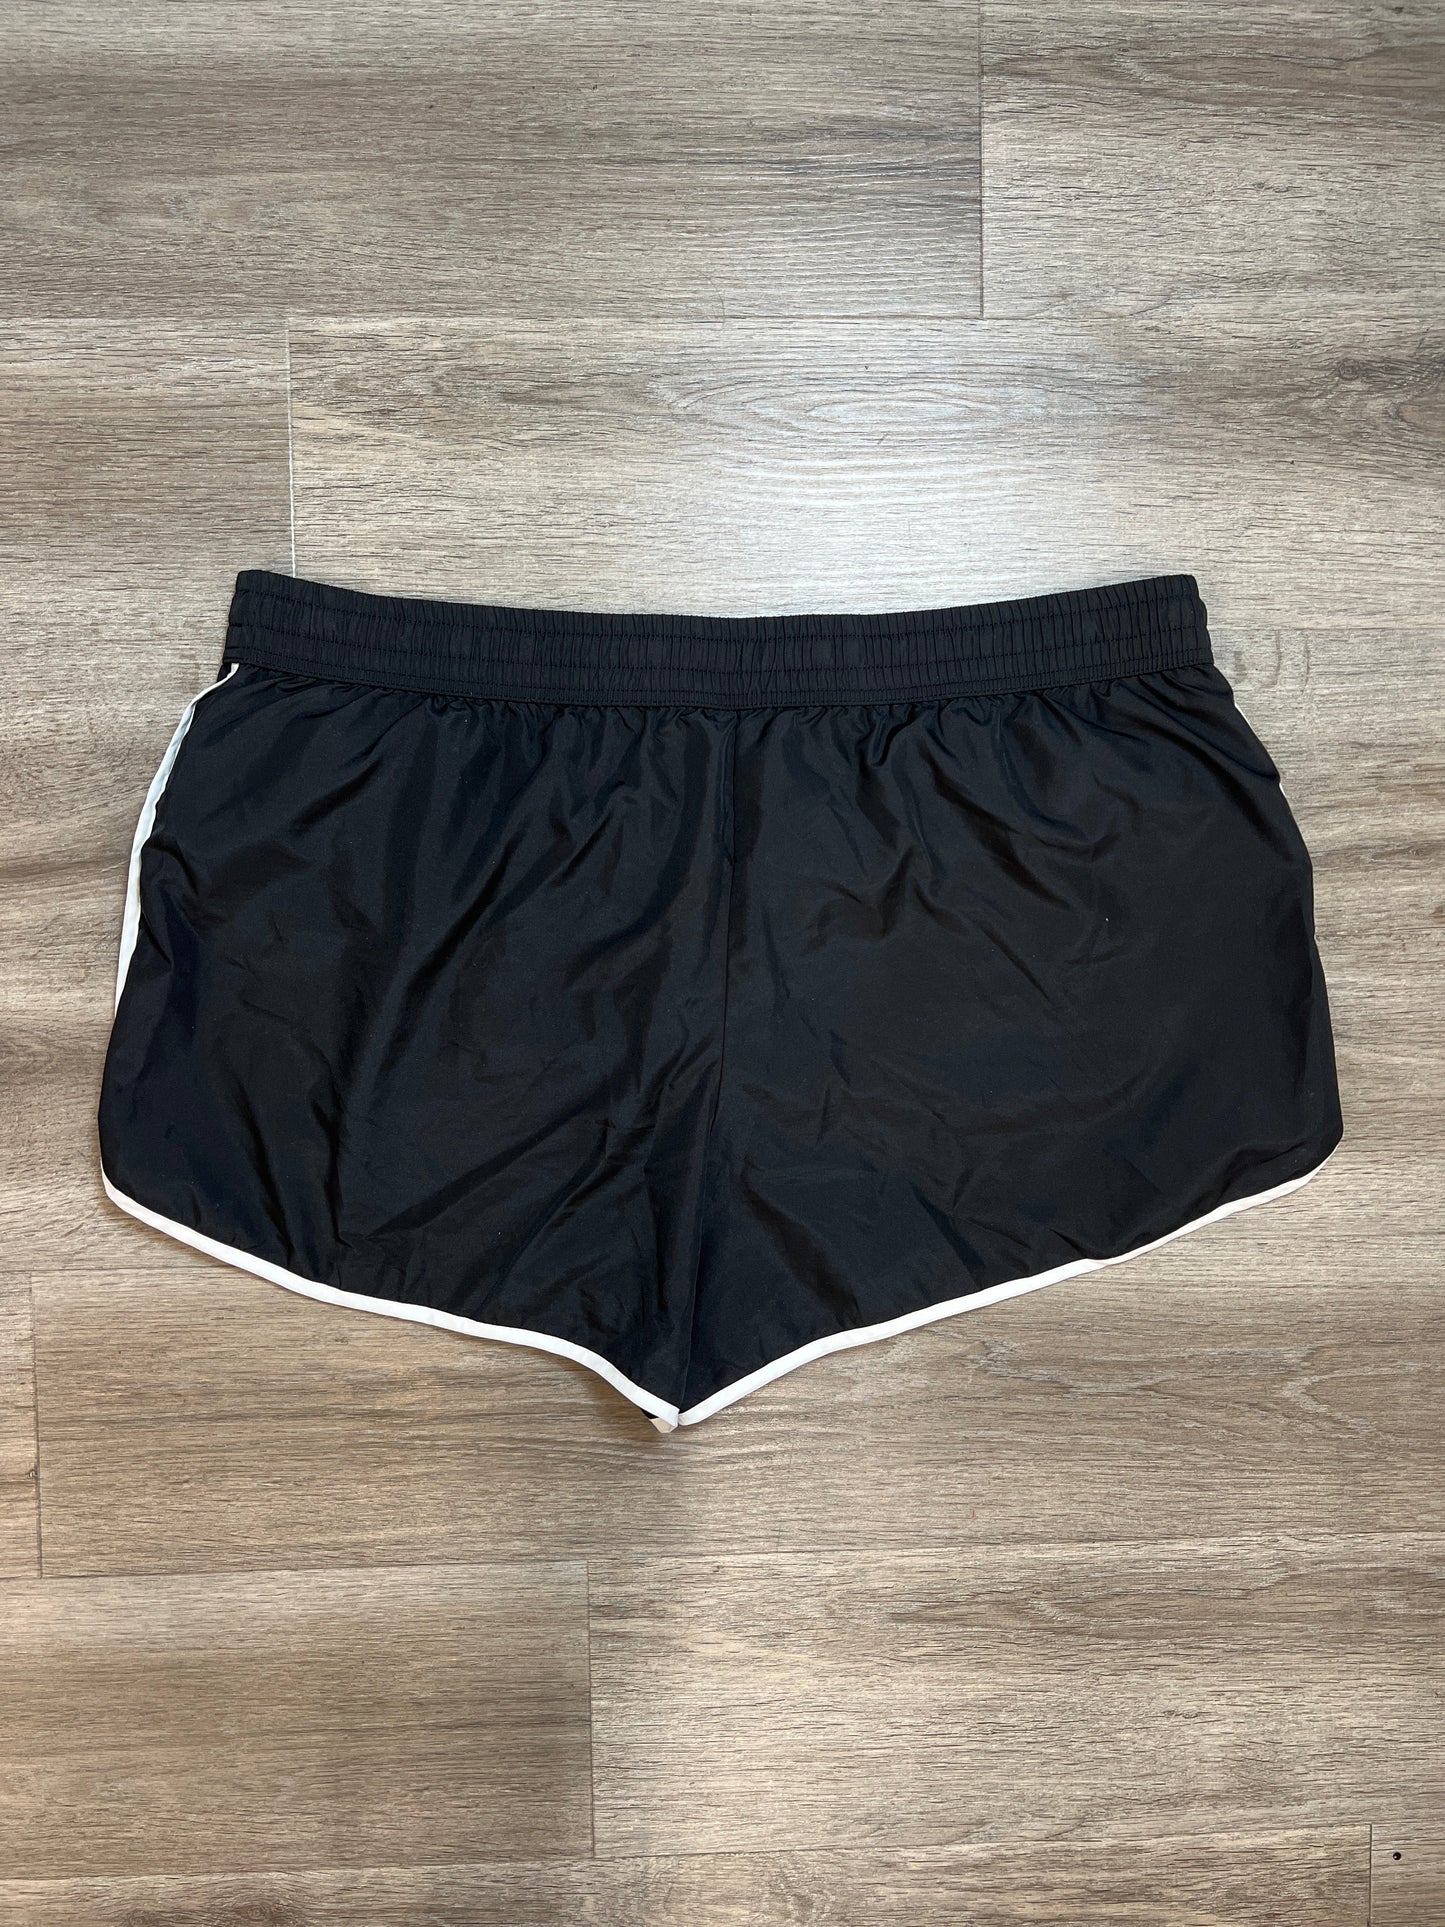 Athletic Shorts By Fila  Size: 2x